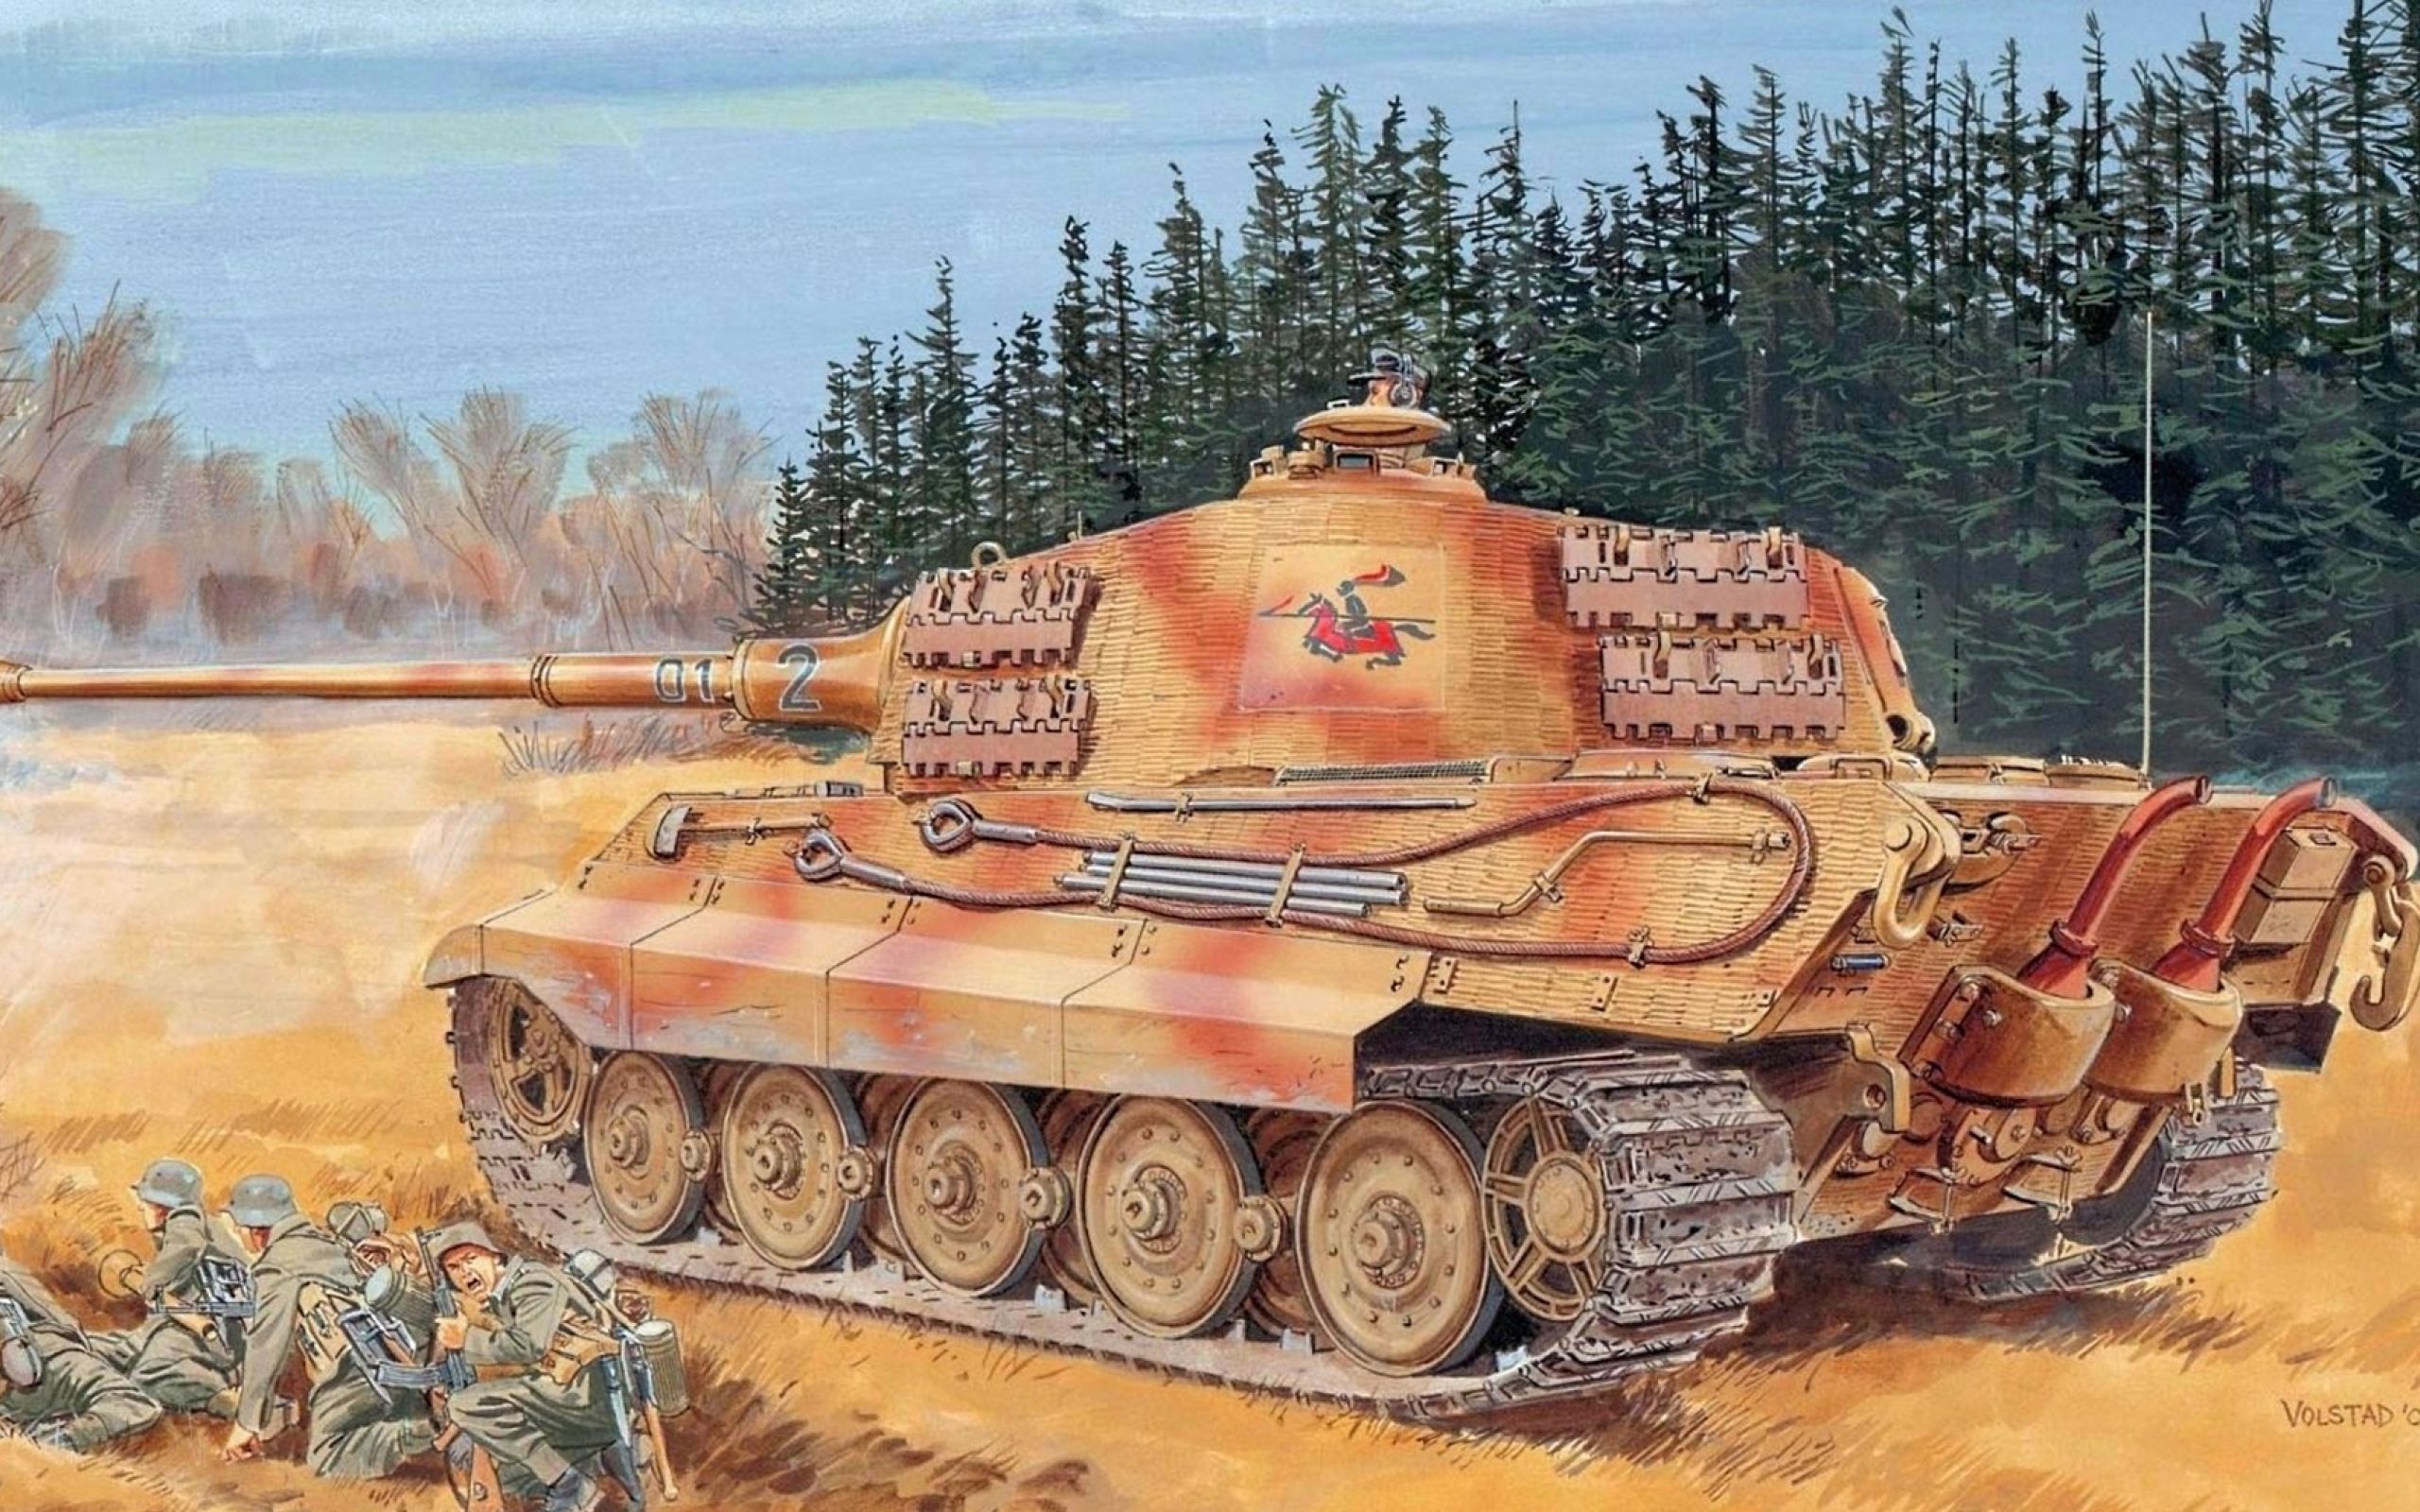 Vi ausf. Танк тигр 2. Королевский тигр танк. Немецкий танк Королевский тигр. Танк тигр и Королевский тигр.